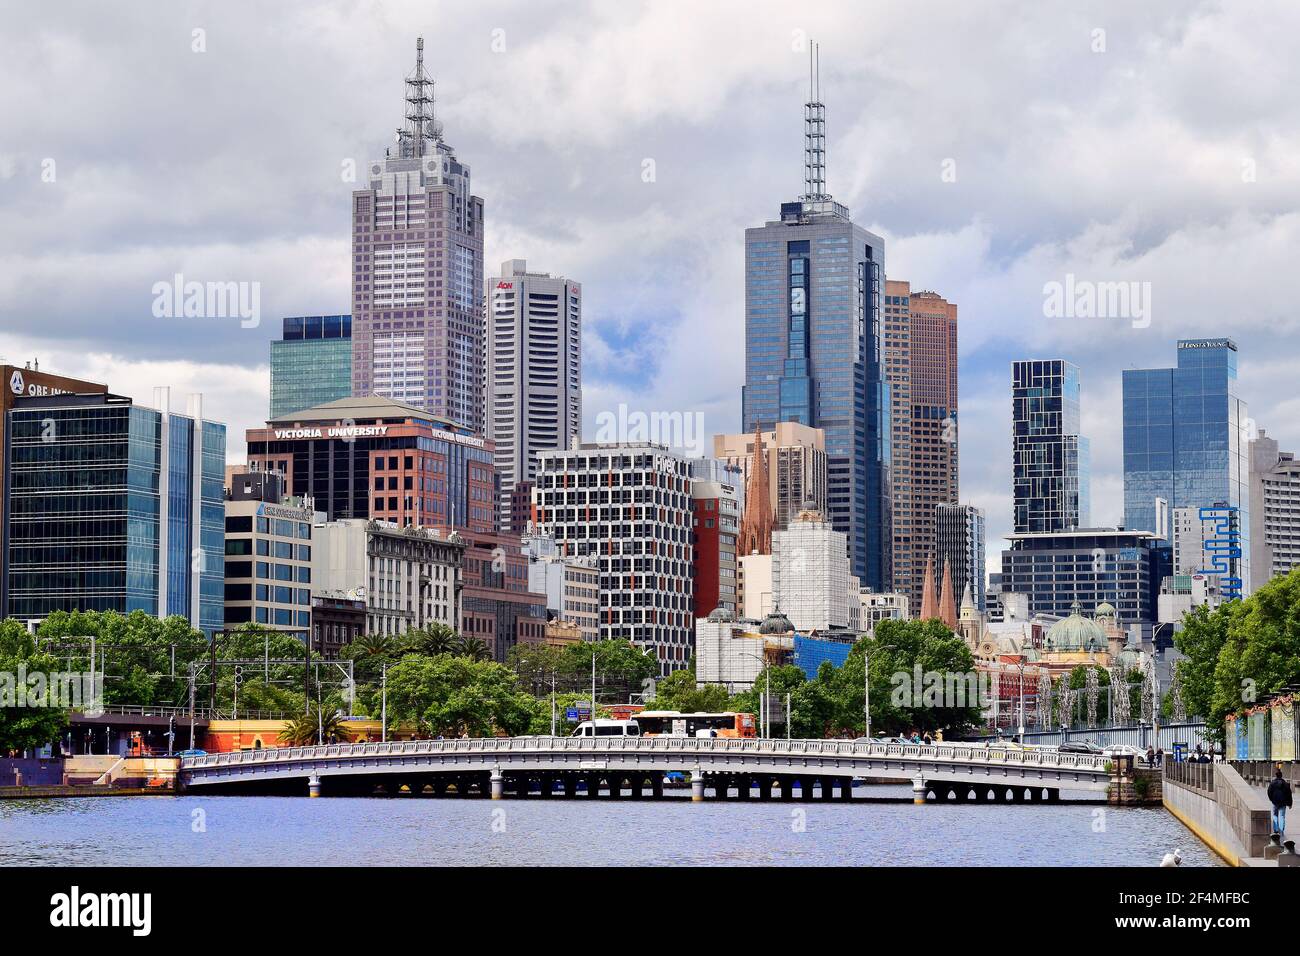 Melbourne, VIC, Australia - November 03, 2017: Different buildings, skyscrapers and Queens Bridge over Yarra river with Sandridge footbridge behind Stock Photo